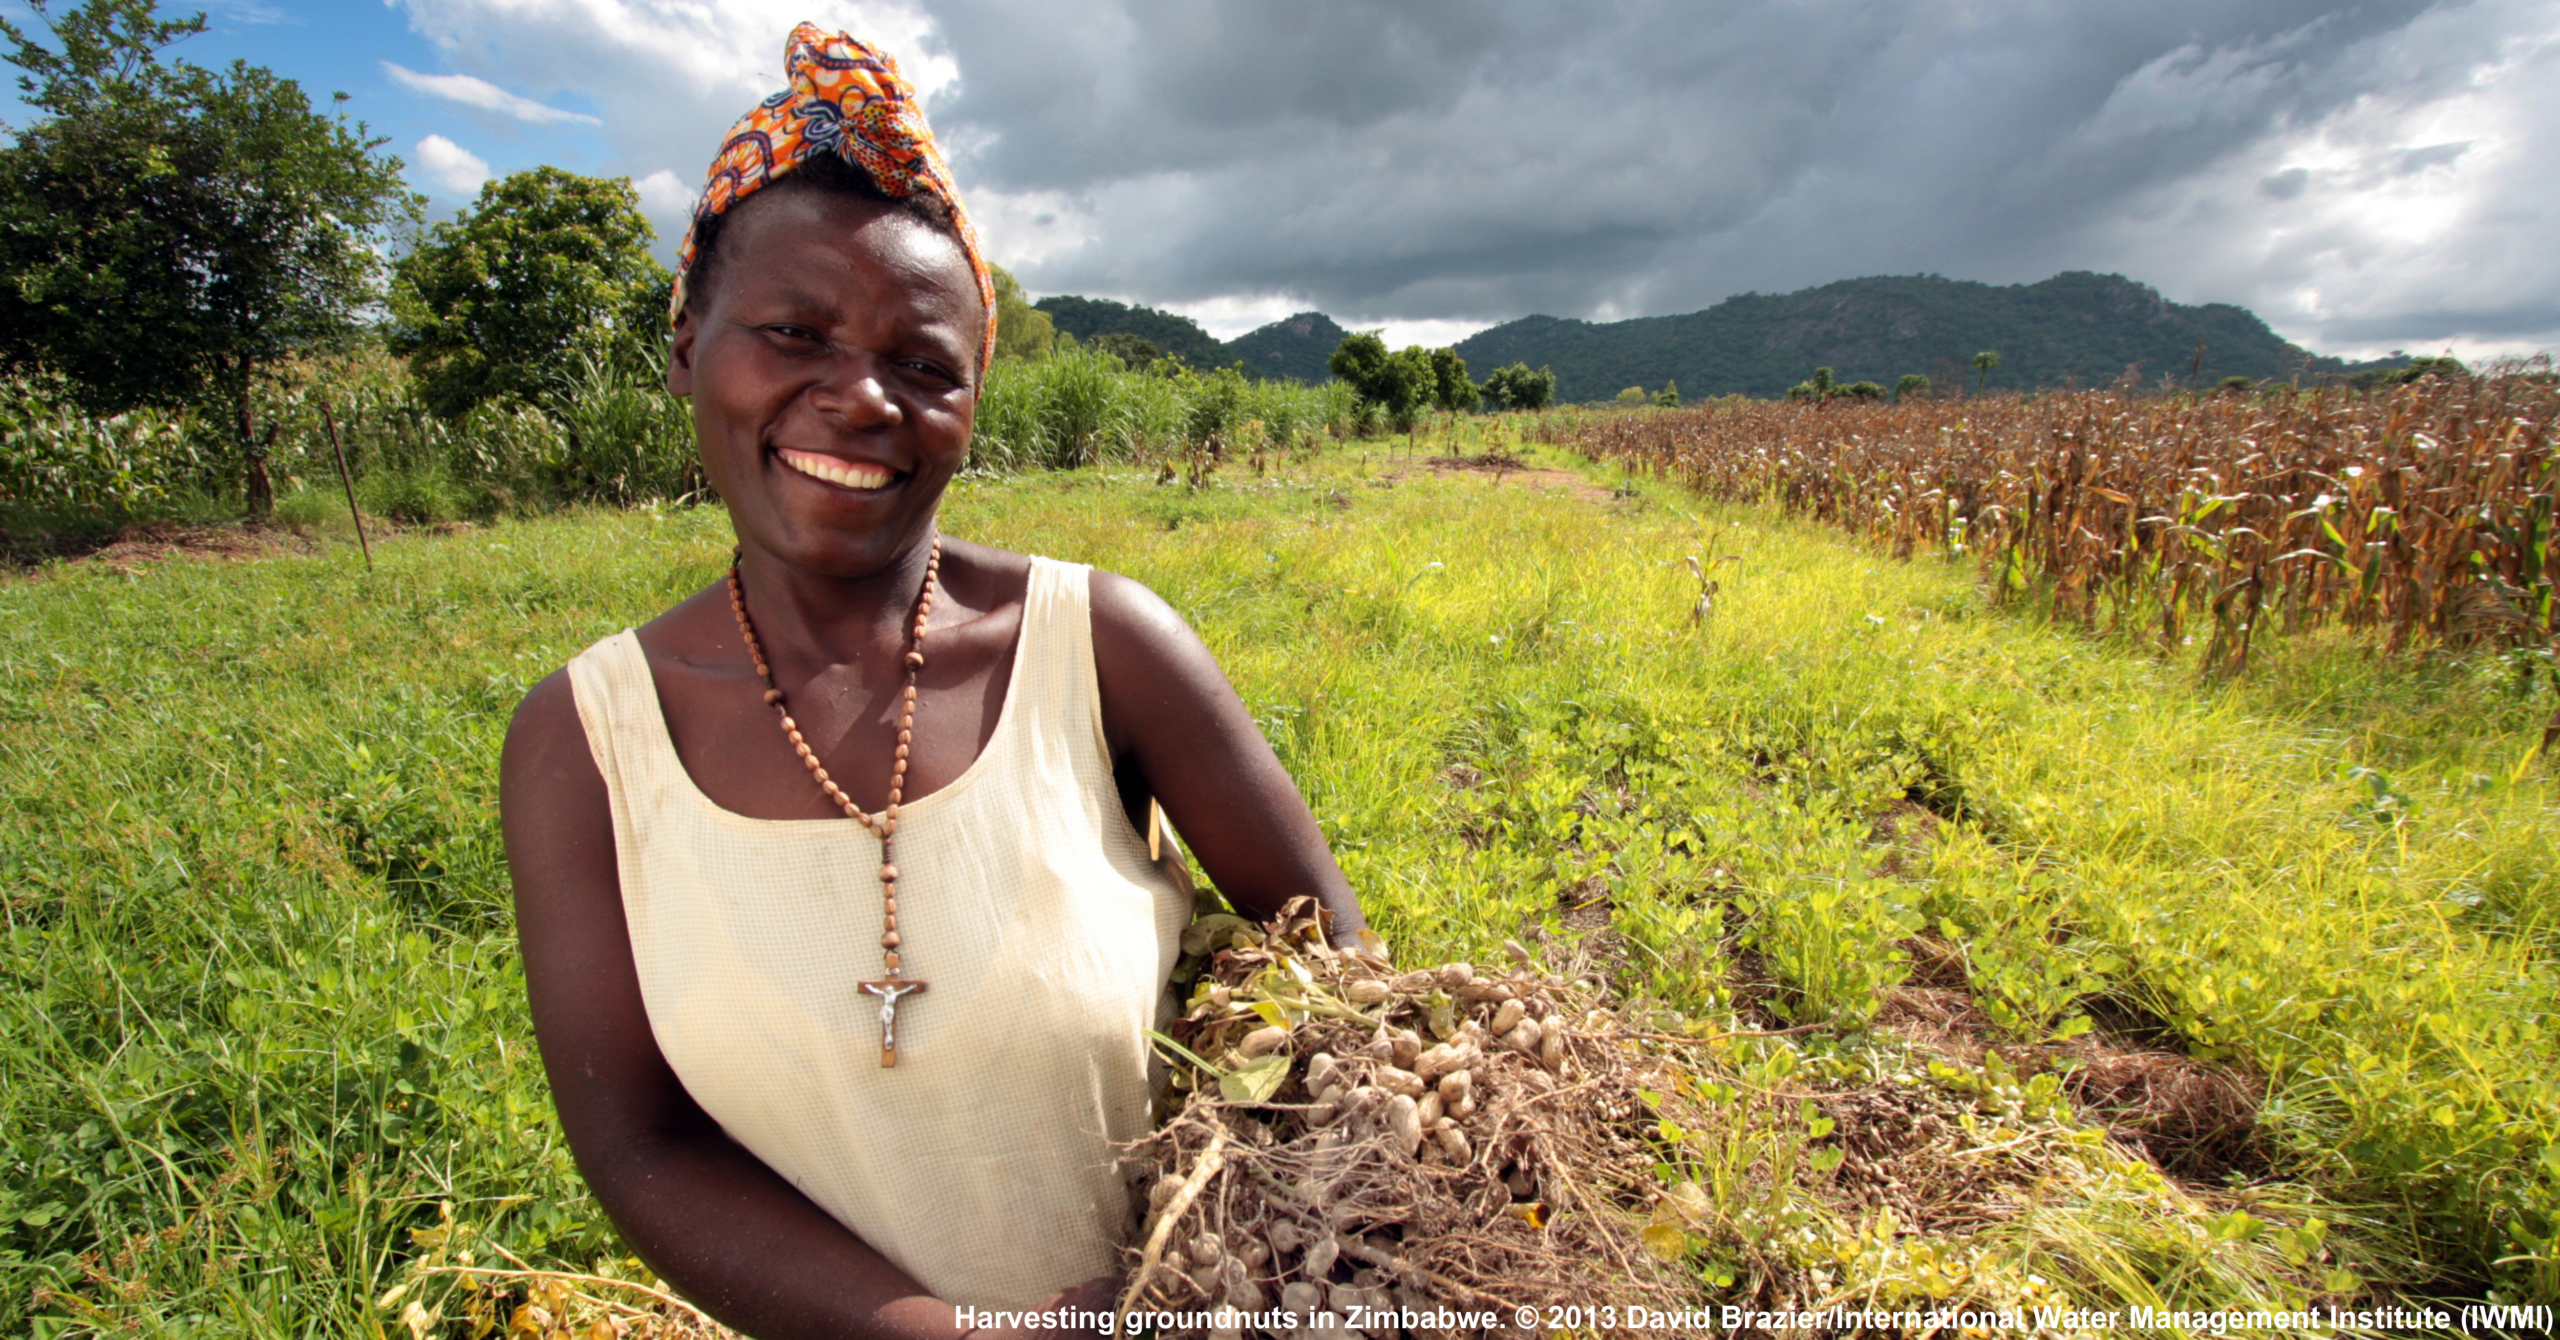 Woman harvesting groundnuts in Zimbabwe.